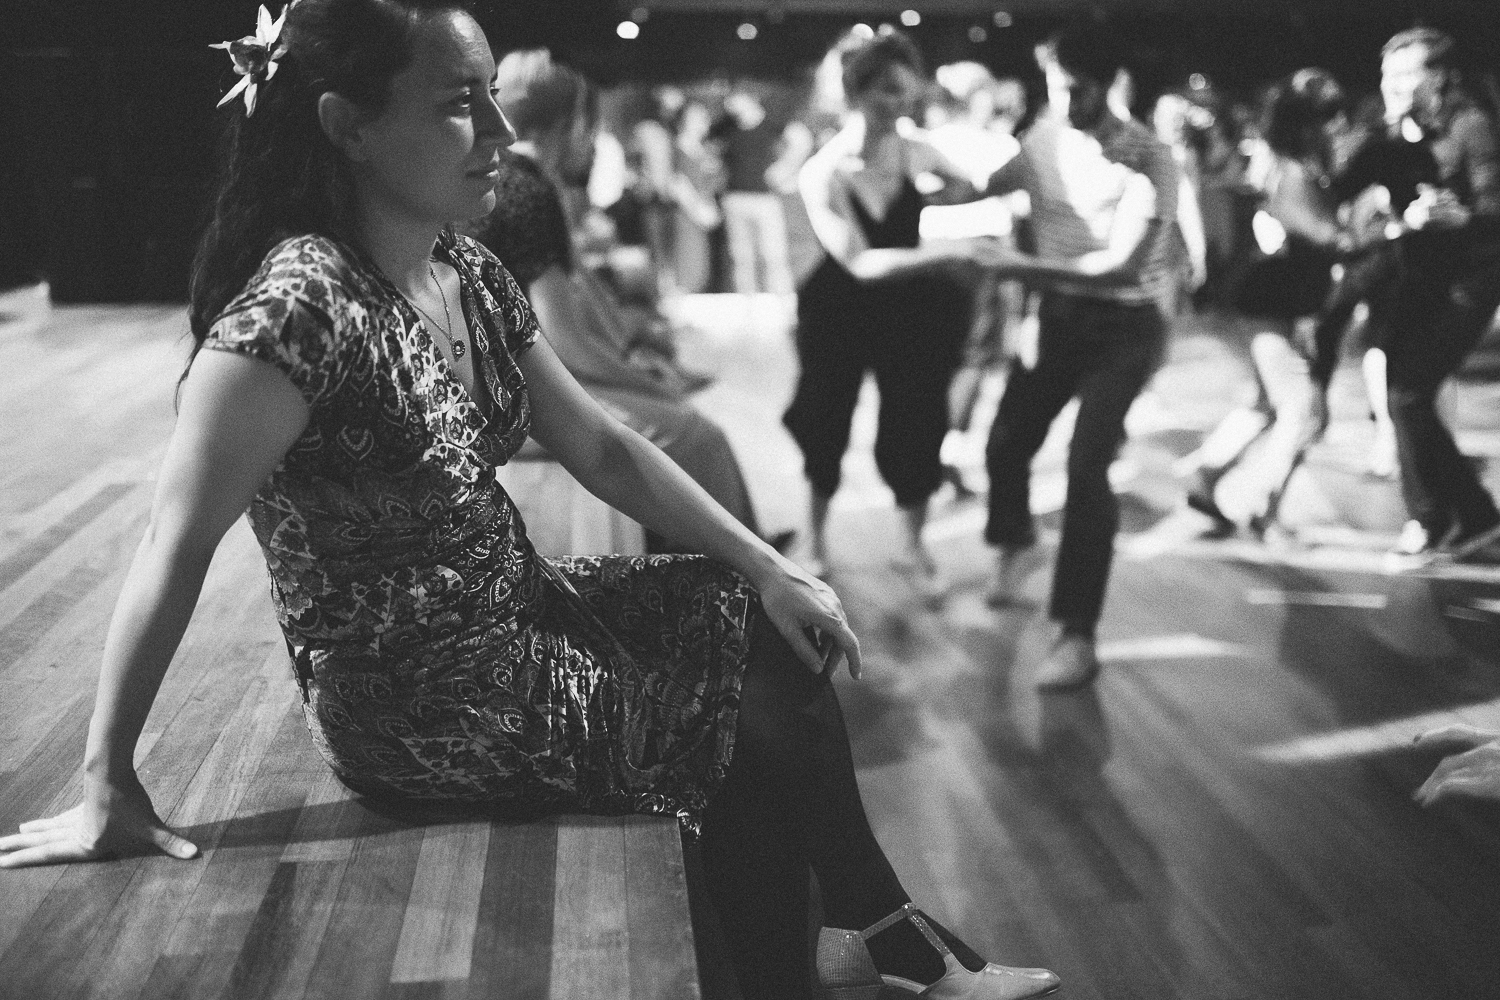  Swingdom 2017 - Photo Credit: For Dancers Only (http://d.pr/1fEEY) - http://www.ebobrie.com/swingdom-2017 